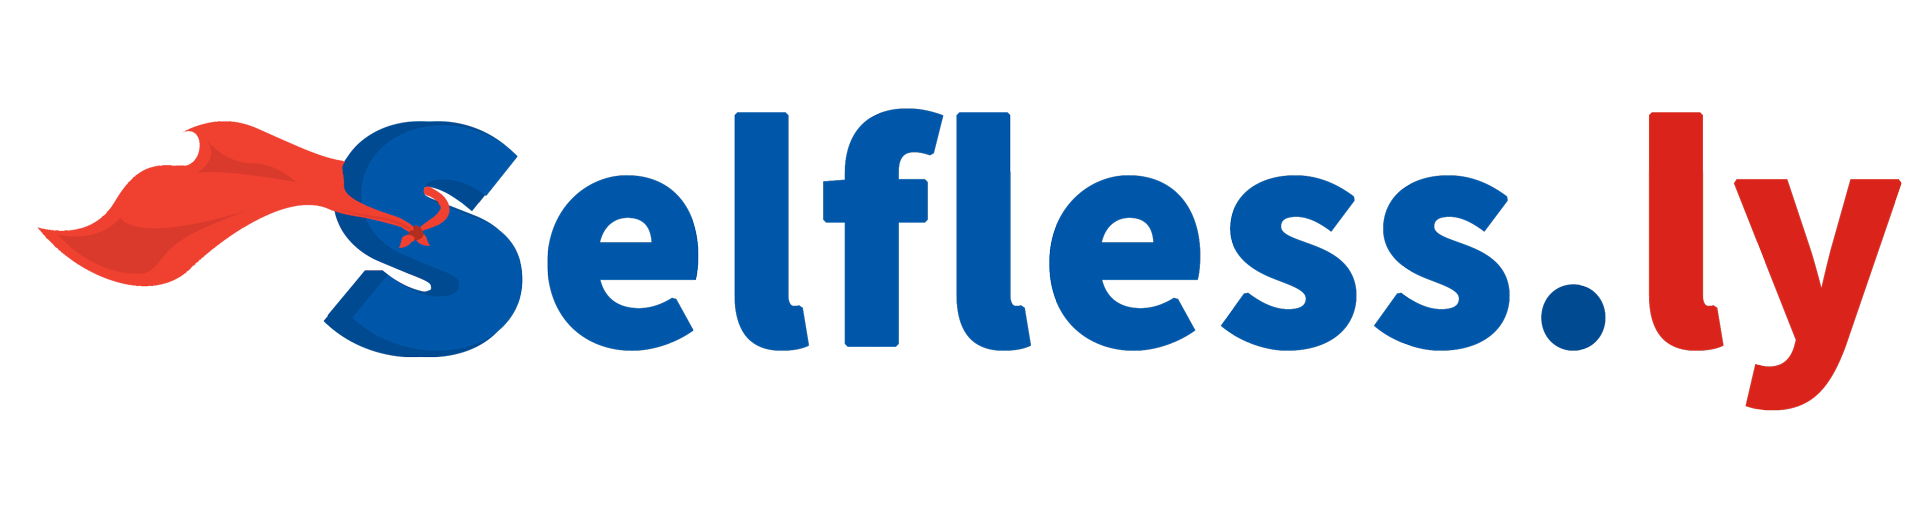 Selfless.ly Logo